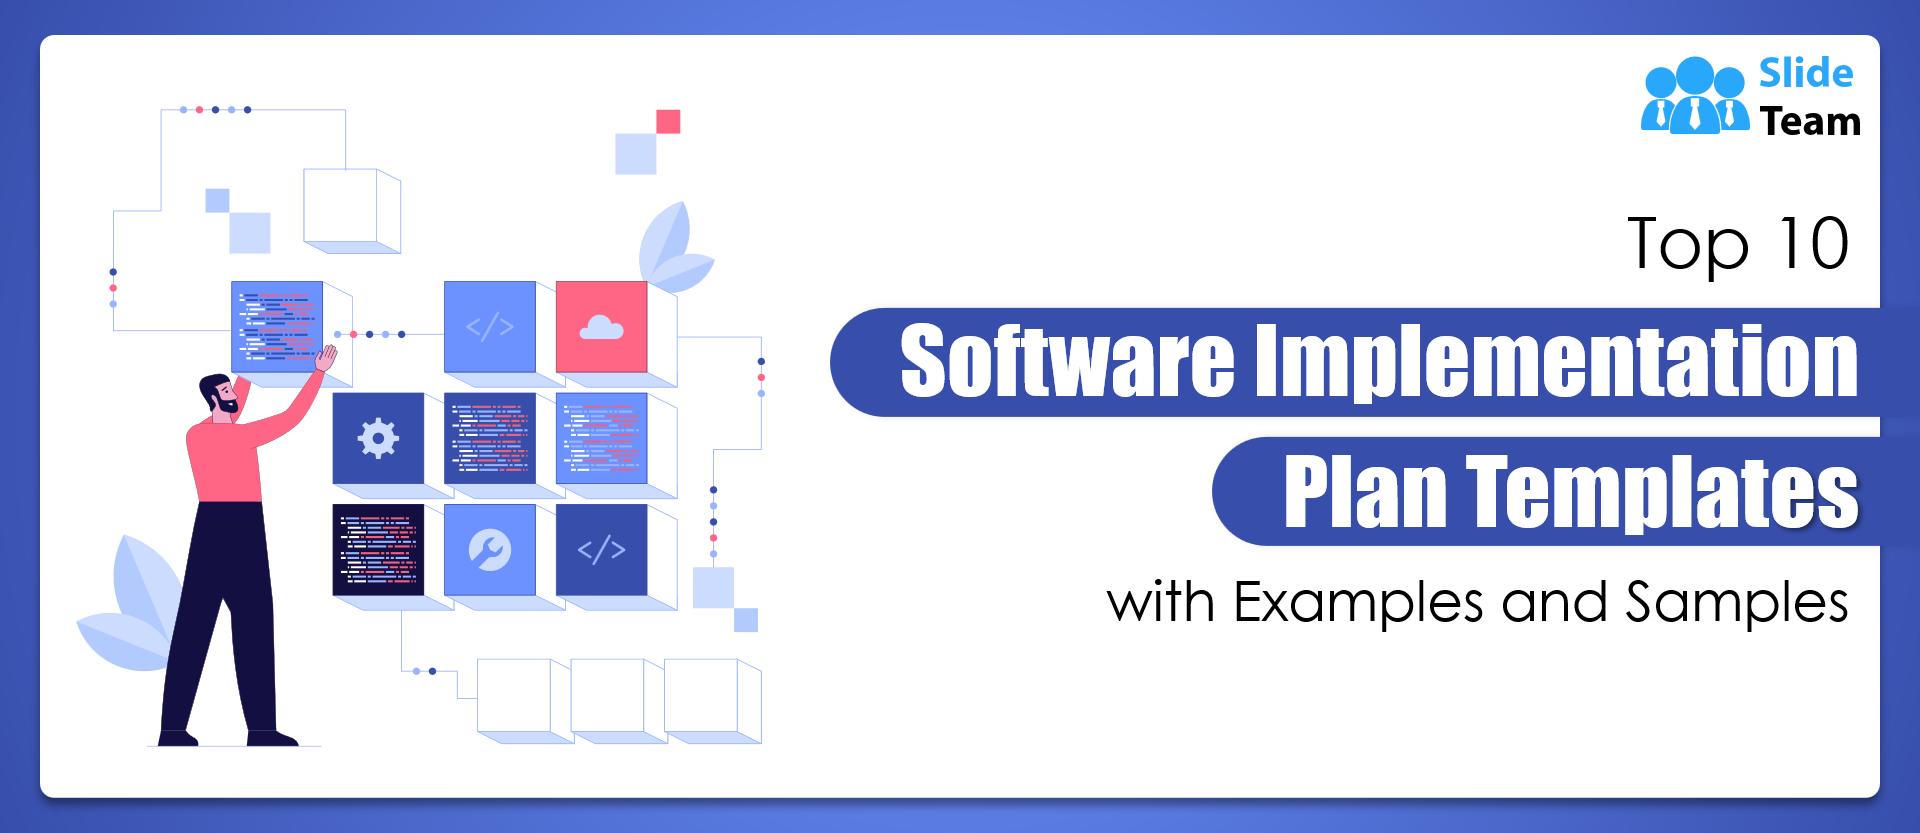 Top 10 Software Implementation Plan Templates